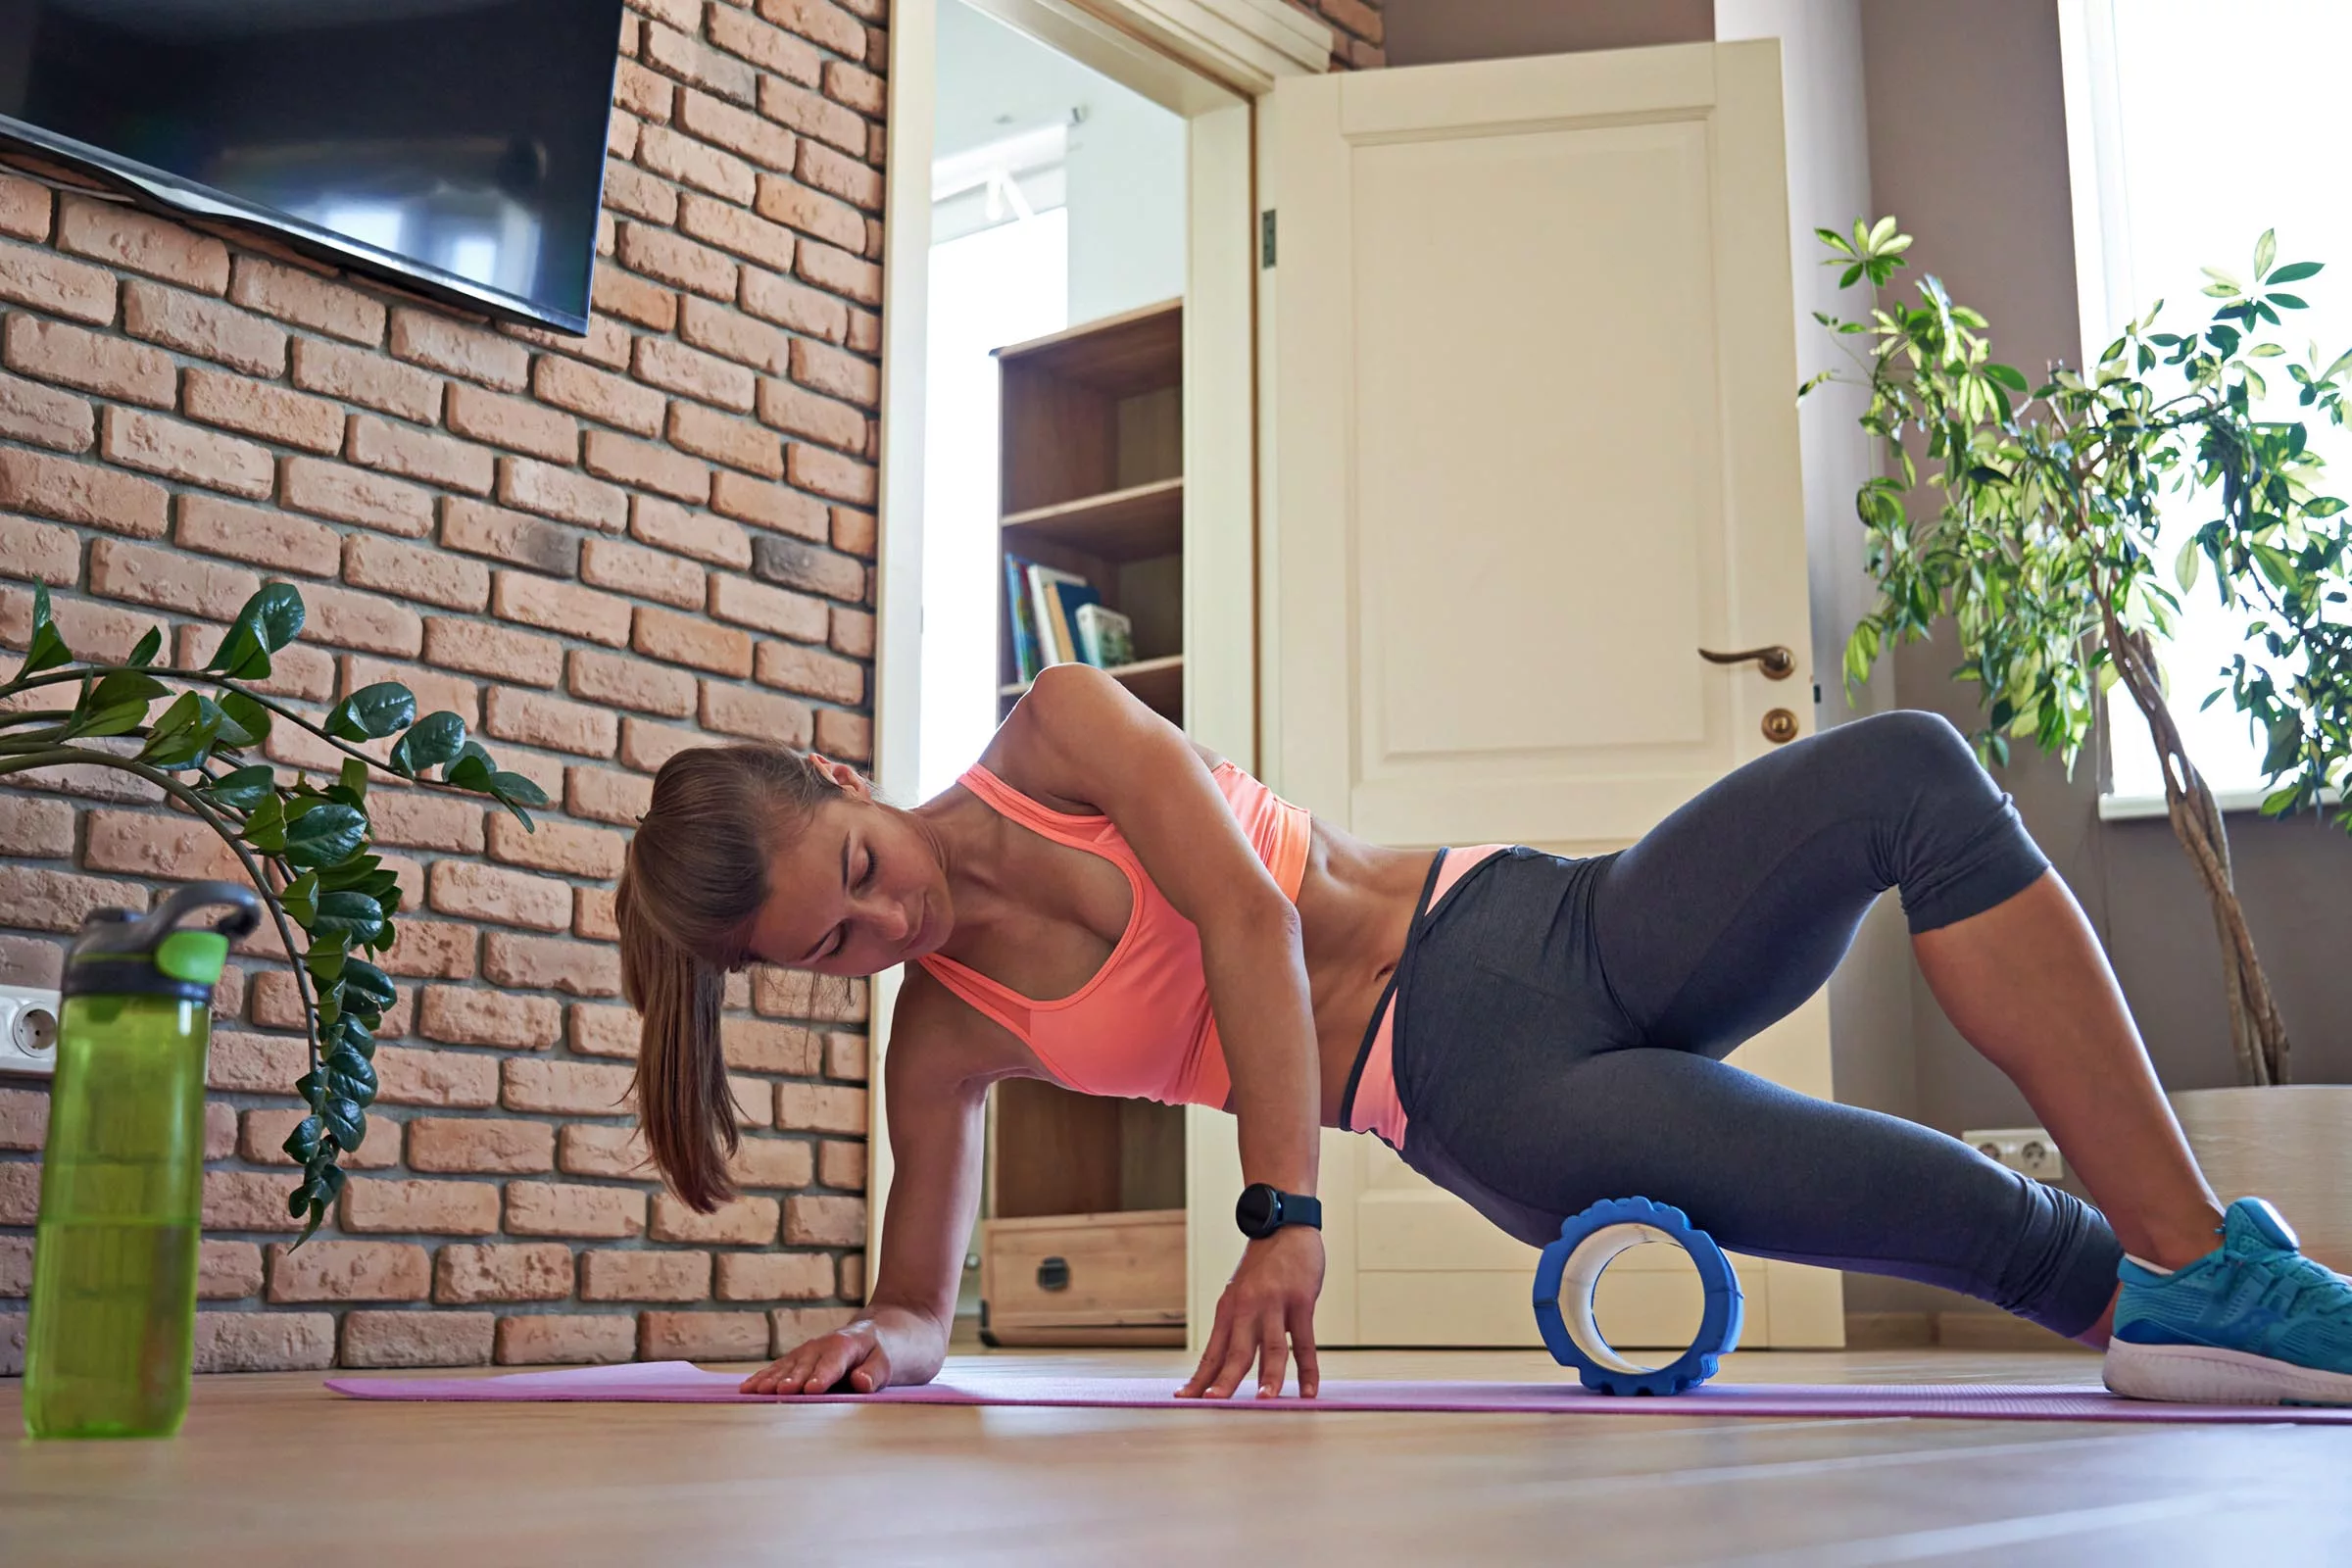 Woman athlete wearing sportswear using foam roller for muscle recovery on living room floor.